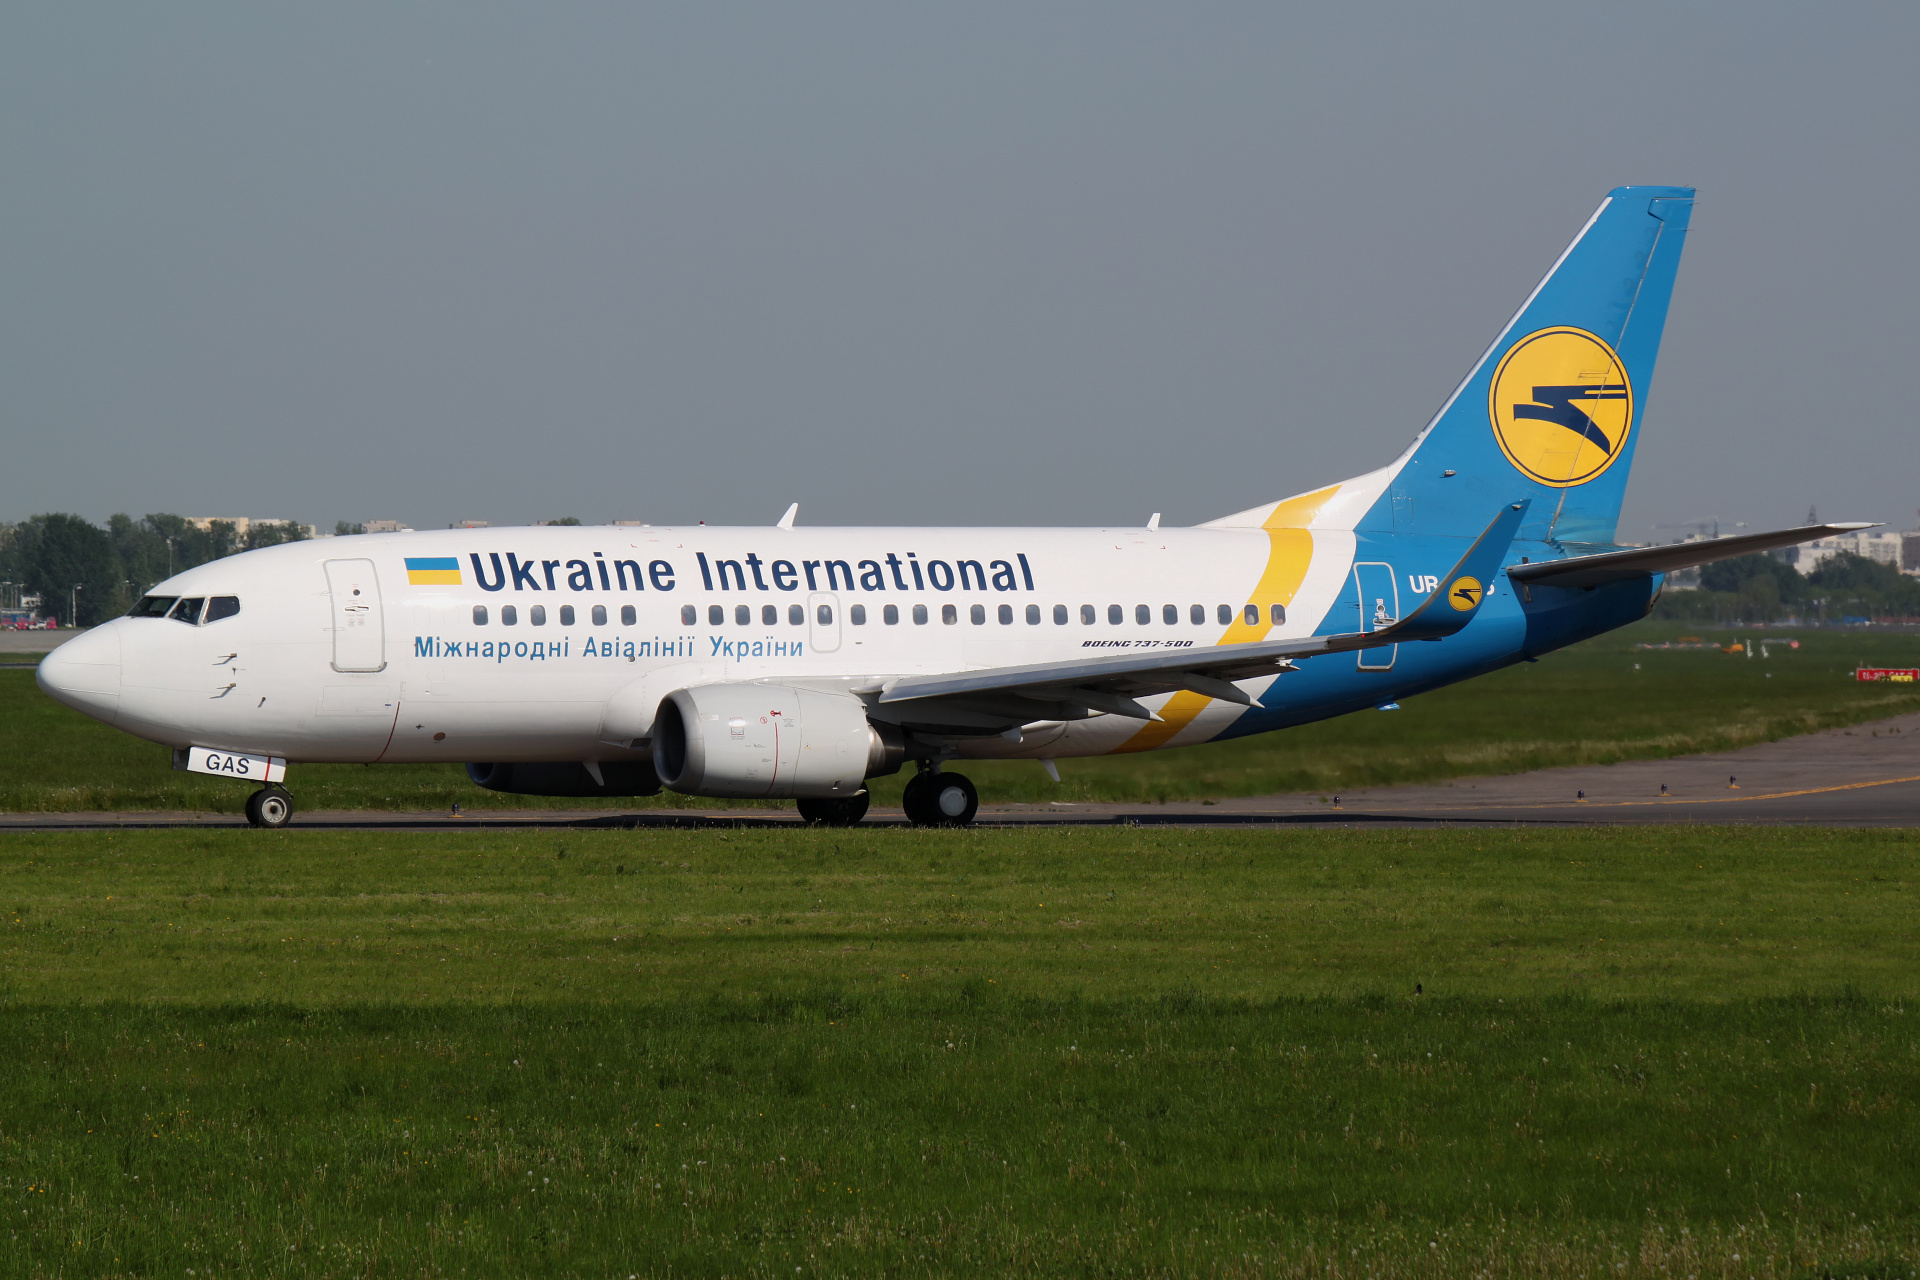 UR-GAS, Ukraine International Airlines (Aircraft » EPWA Spotting » Boeing 737-500)